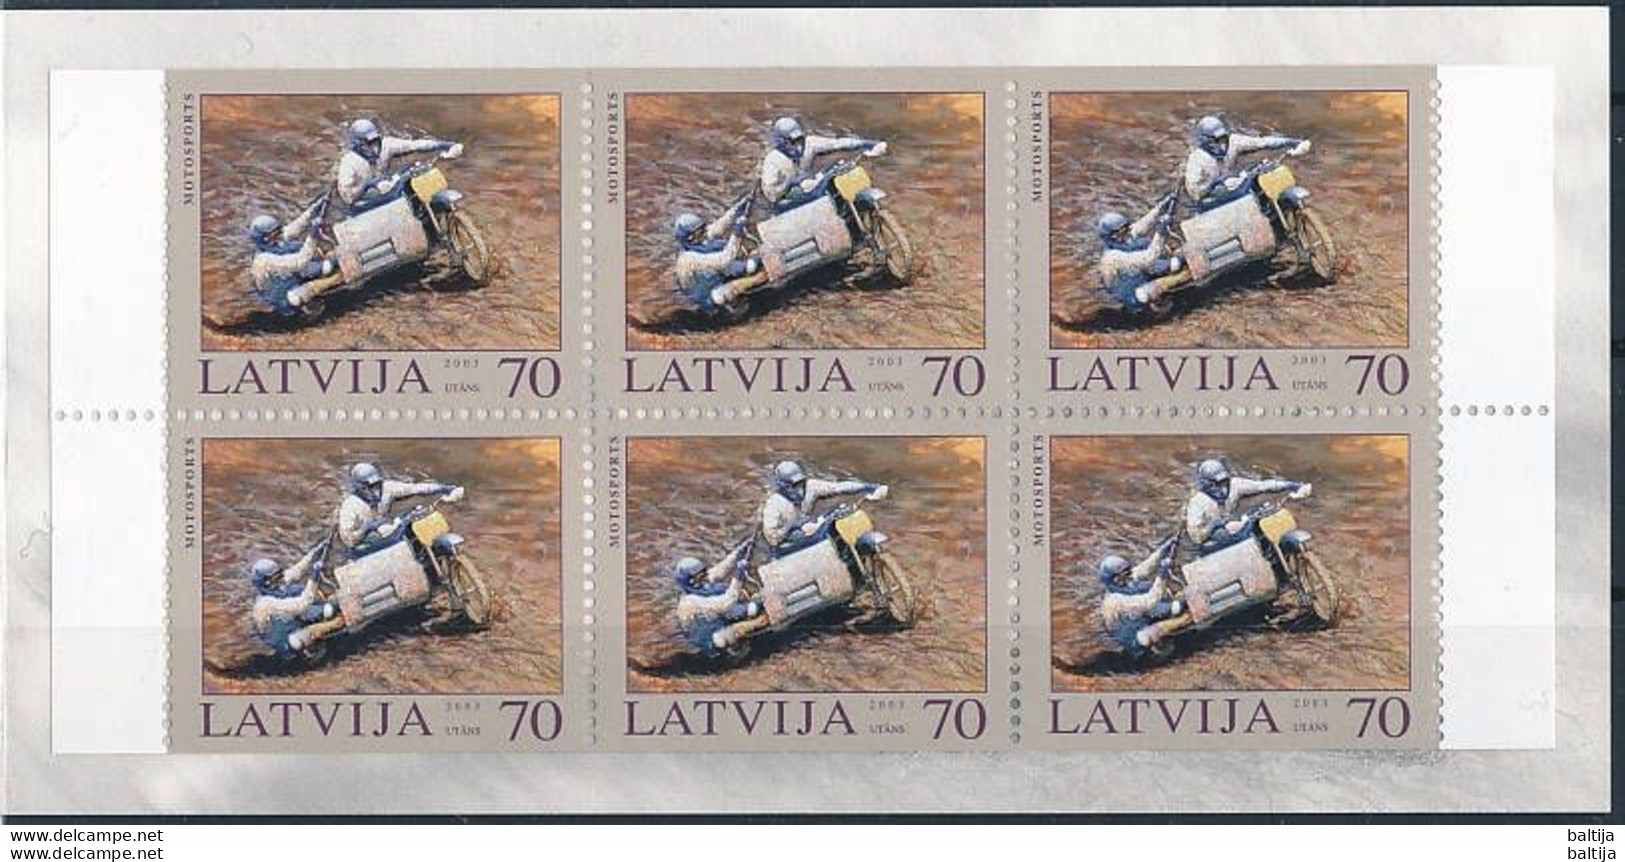 Latvia, Mi 599 ** MNH, Markenheft, Booklet / Sidecarcross Racing, Sidecar Motocross / Philatelic Exhibition Helsinki '03 - Motorfietsen